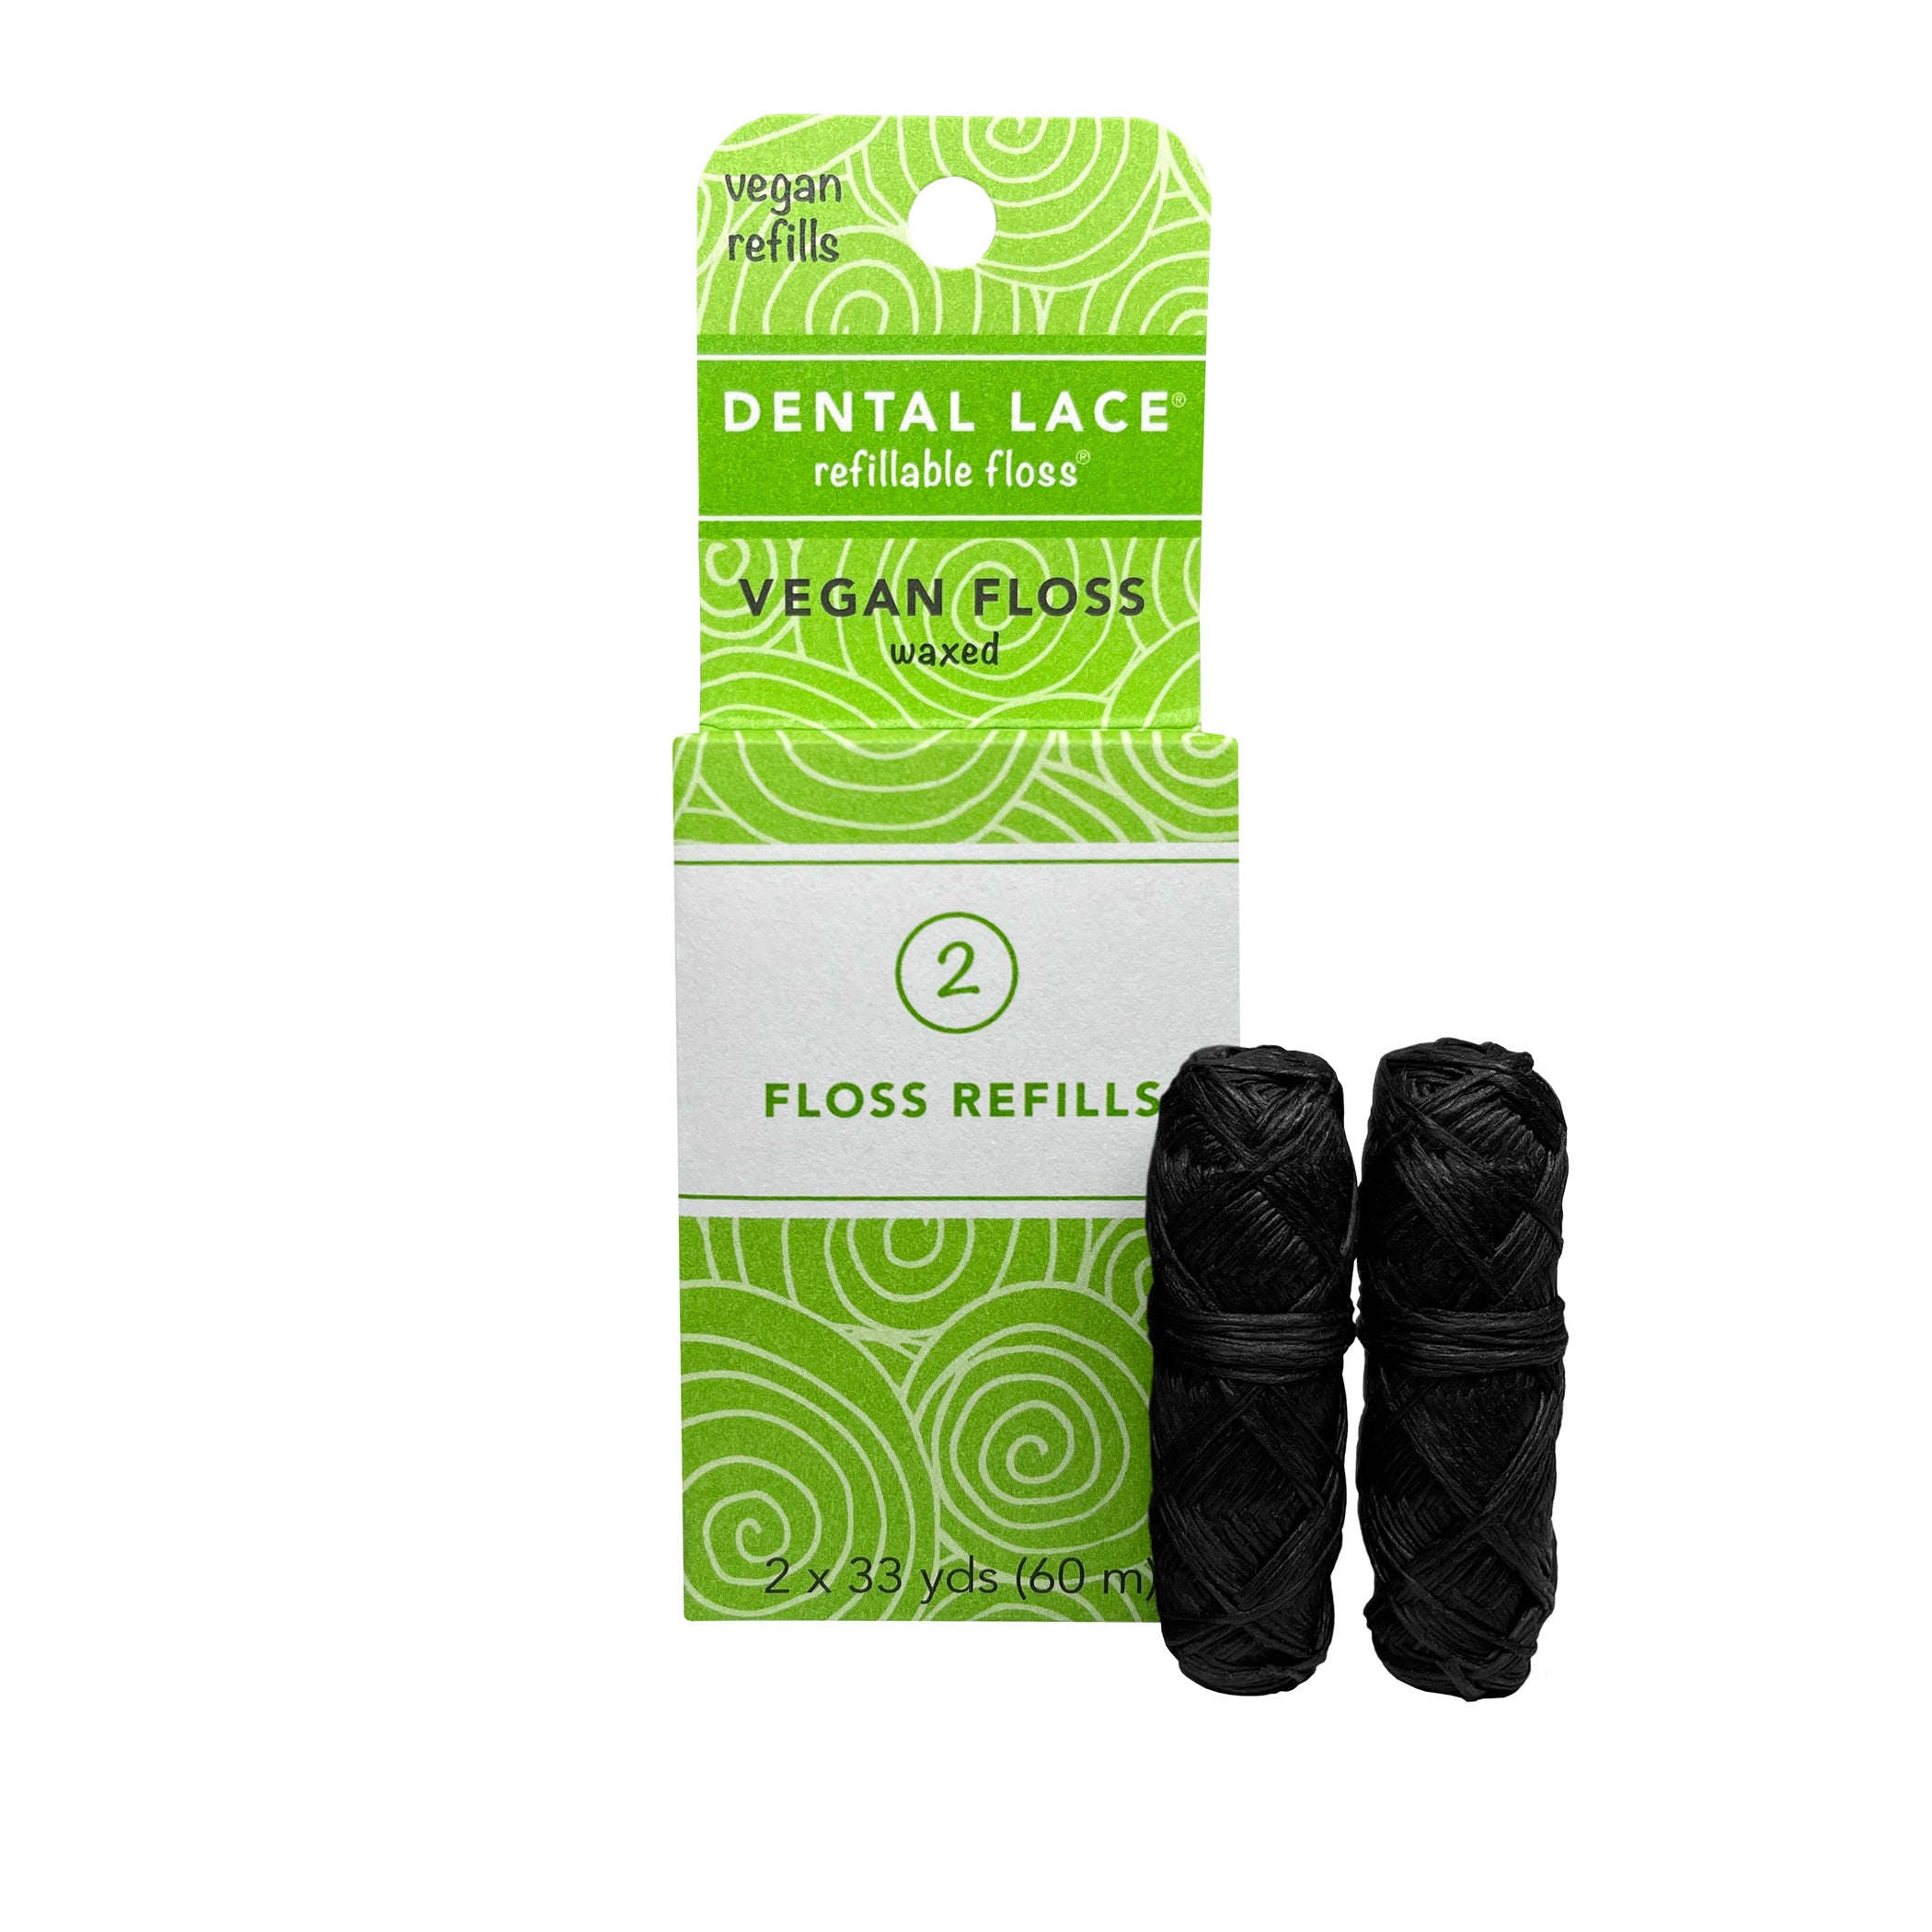 Dental Lace Plant Based Vegan Floss Bundle